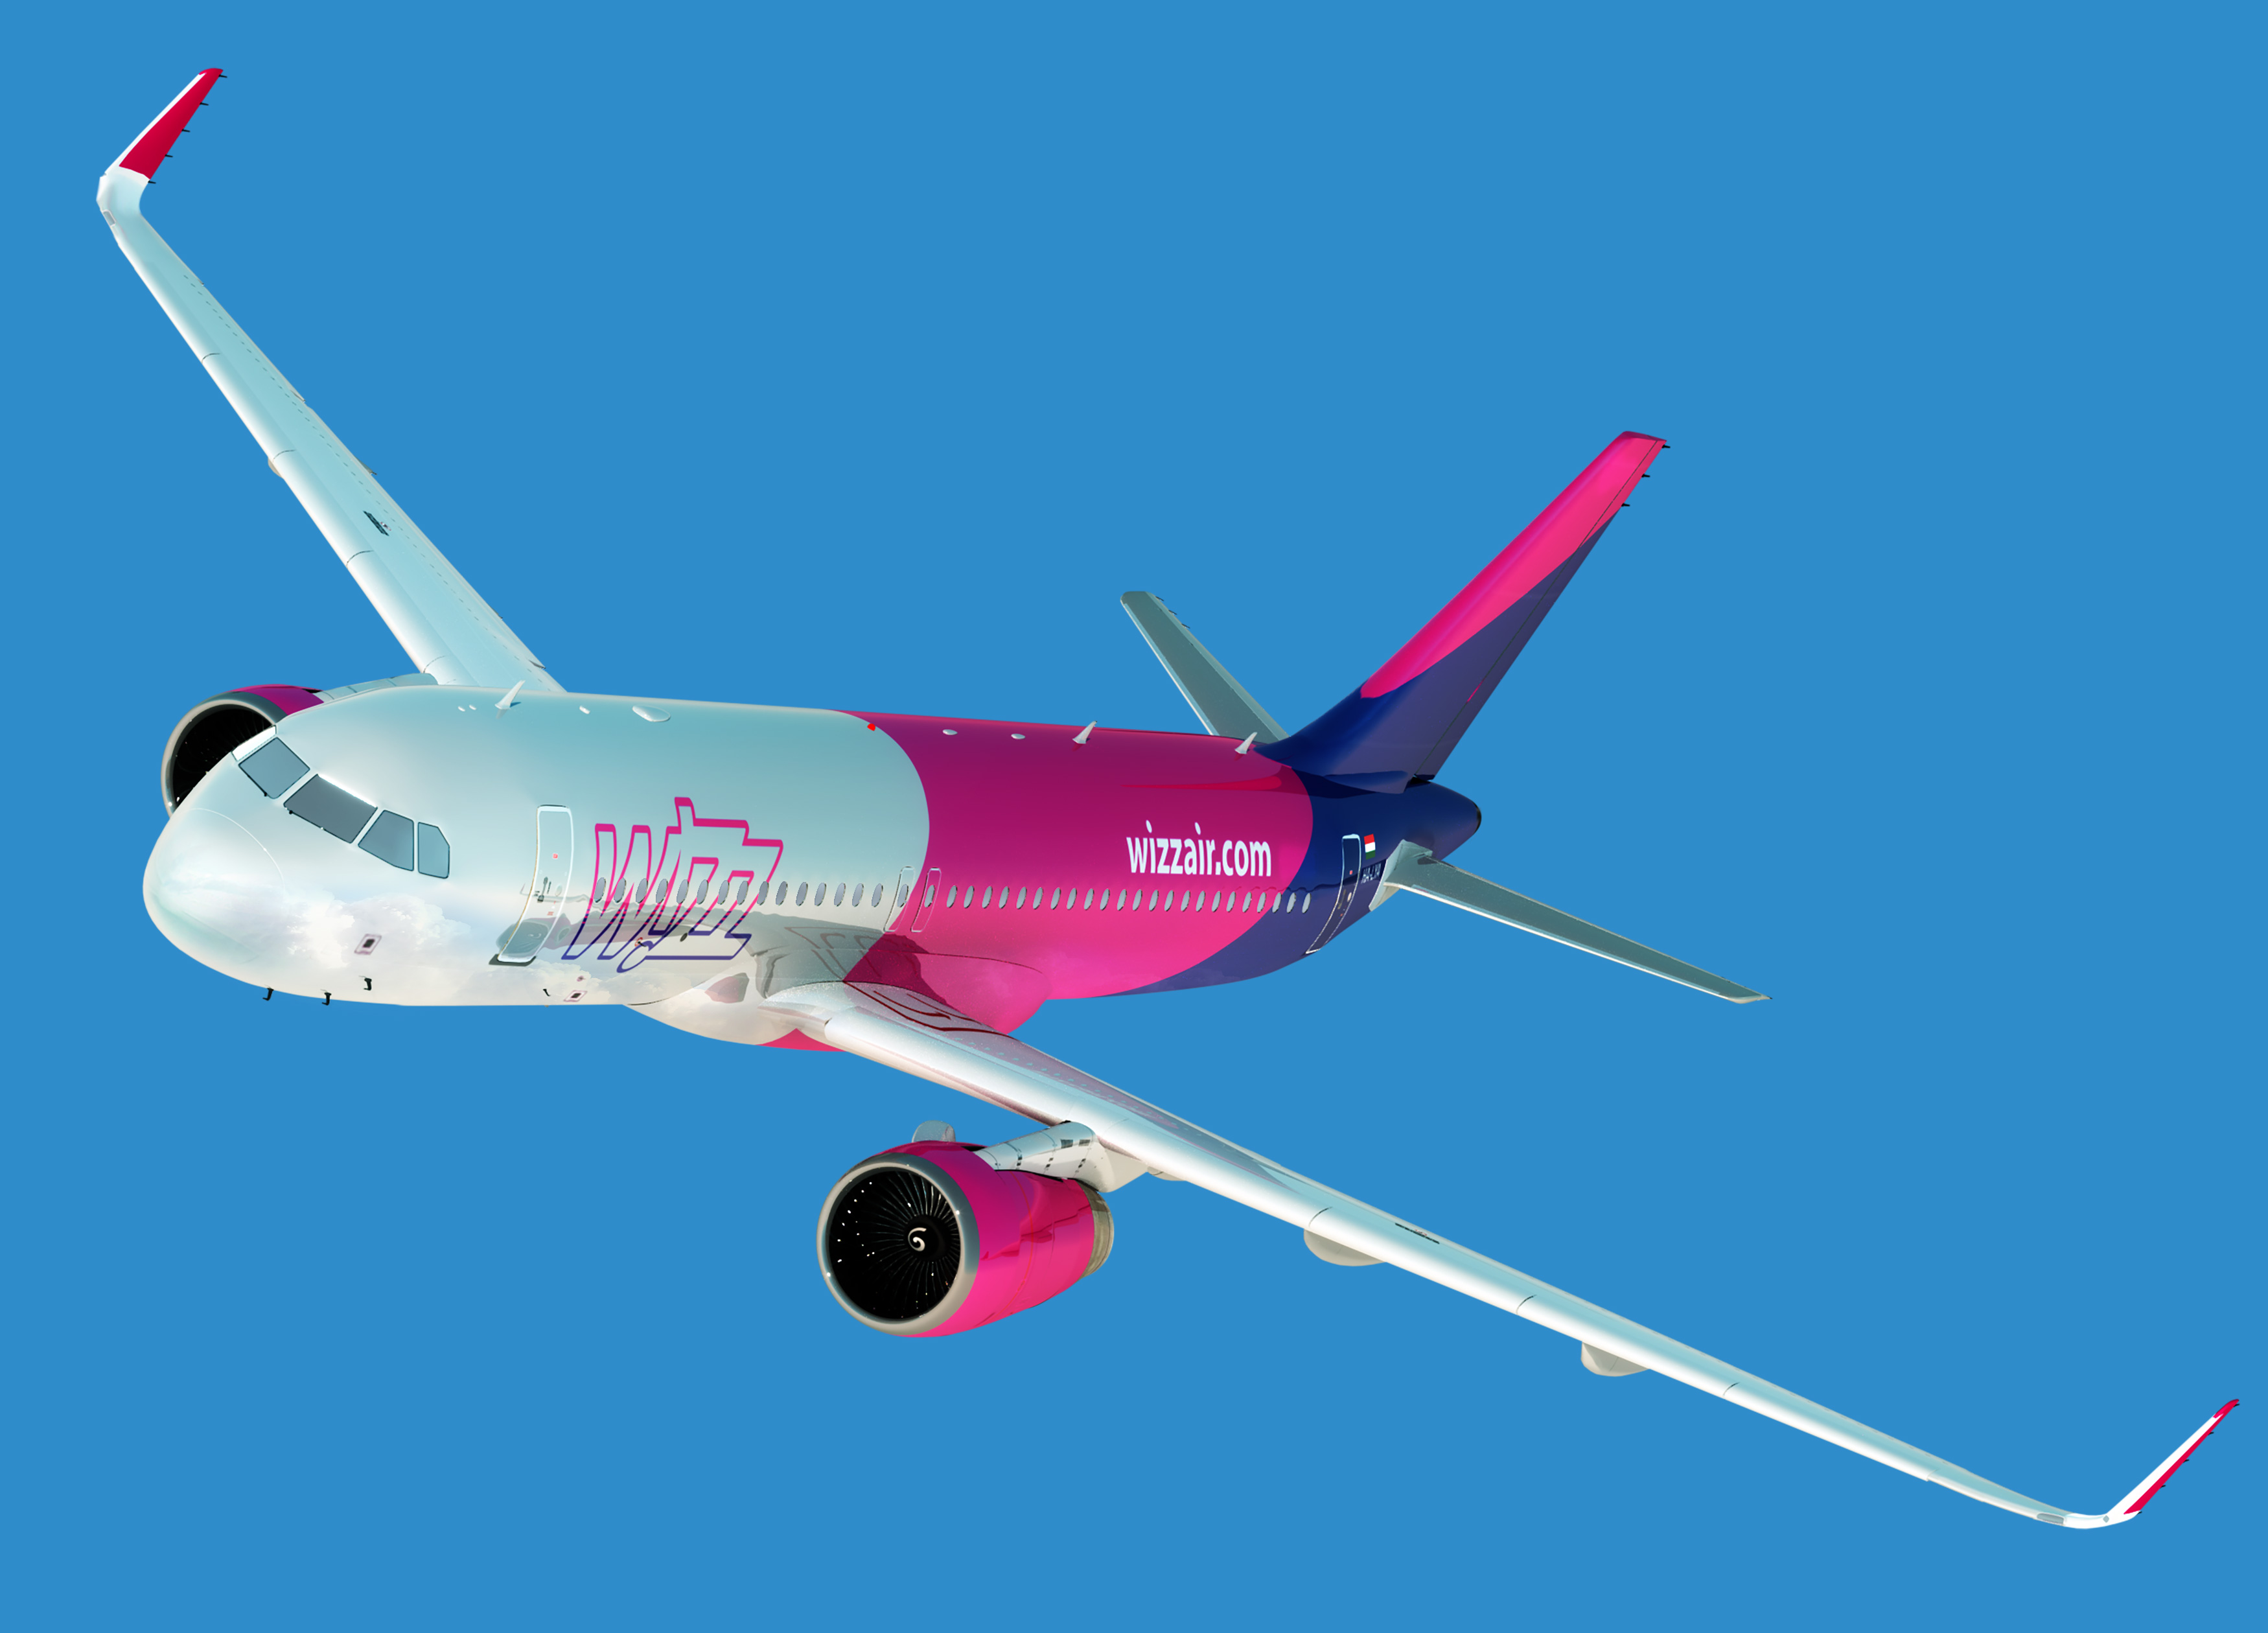 Wizz Air flights to Barcelona